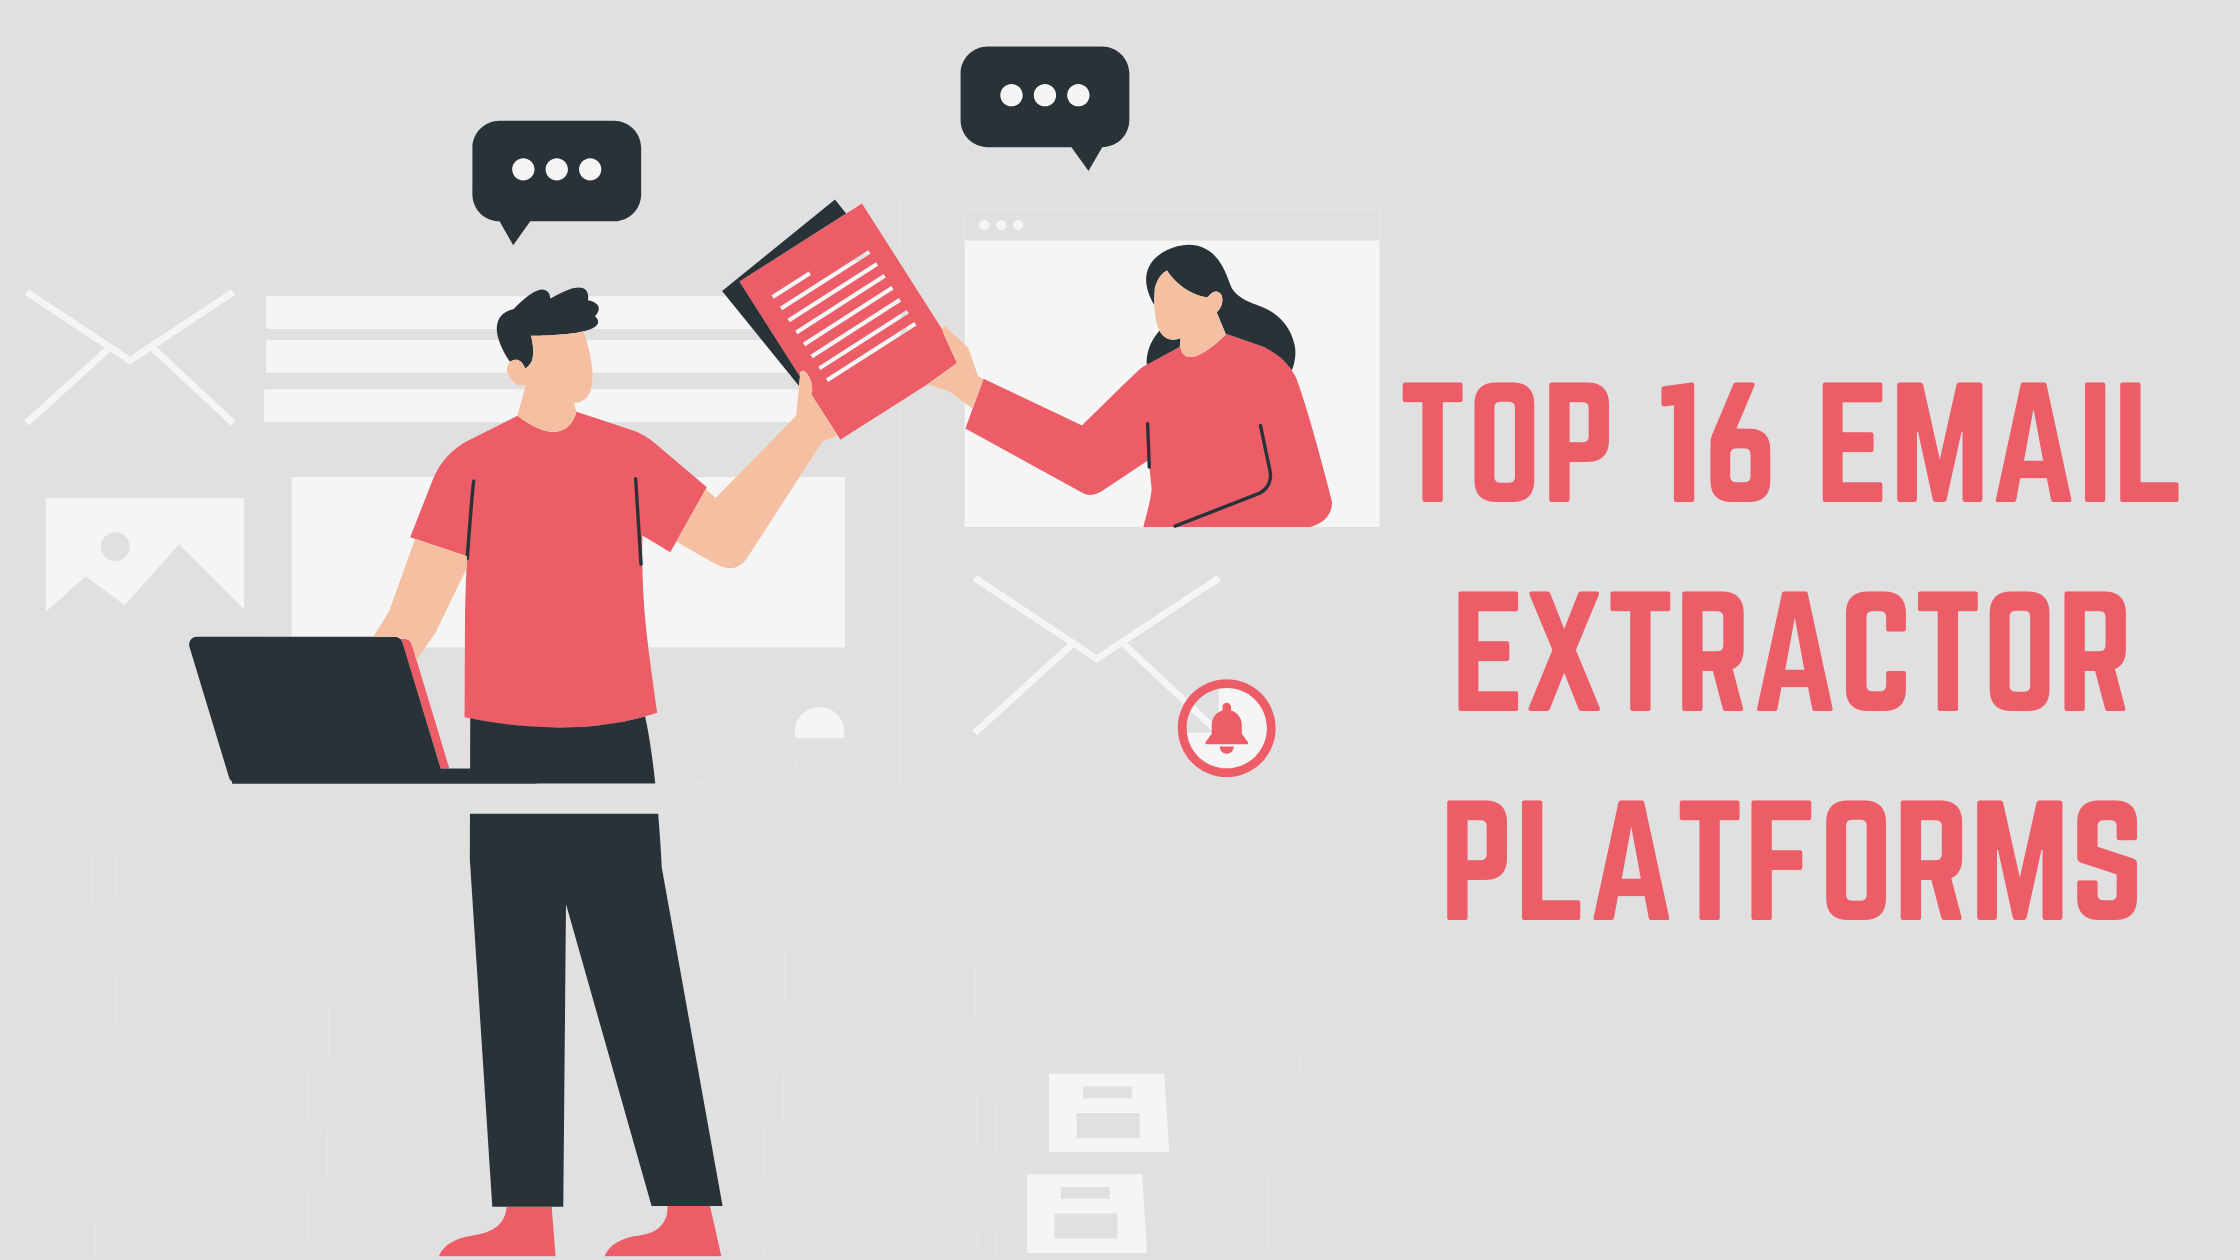 Top 16 Email Extractor Platforms